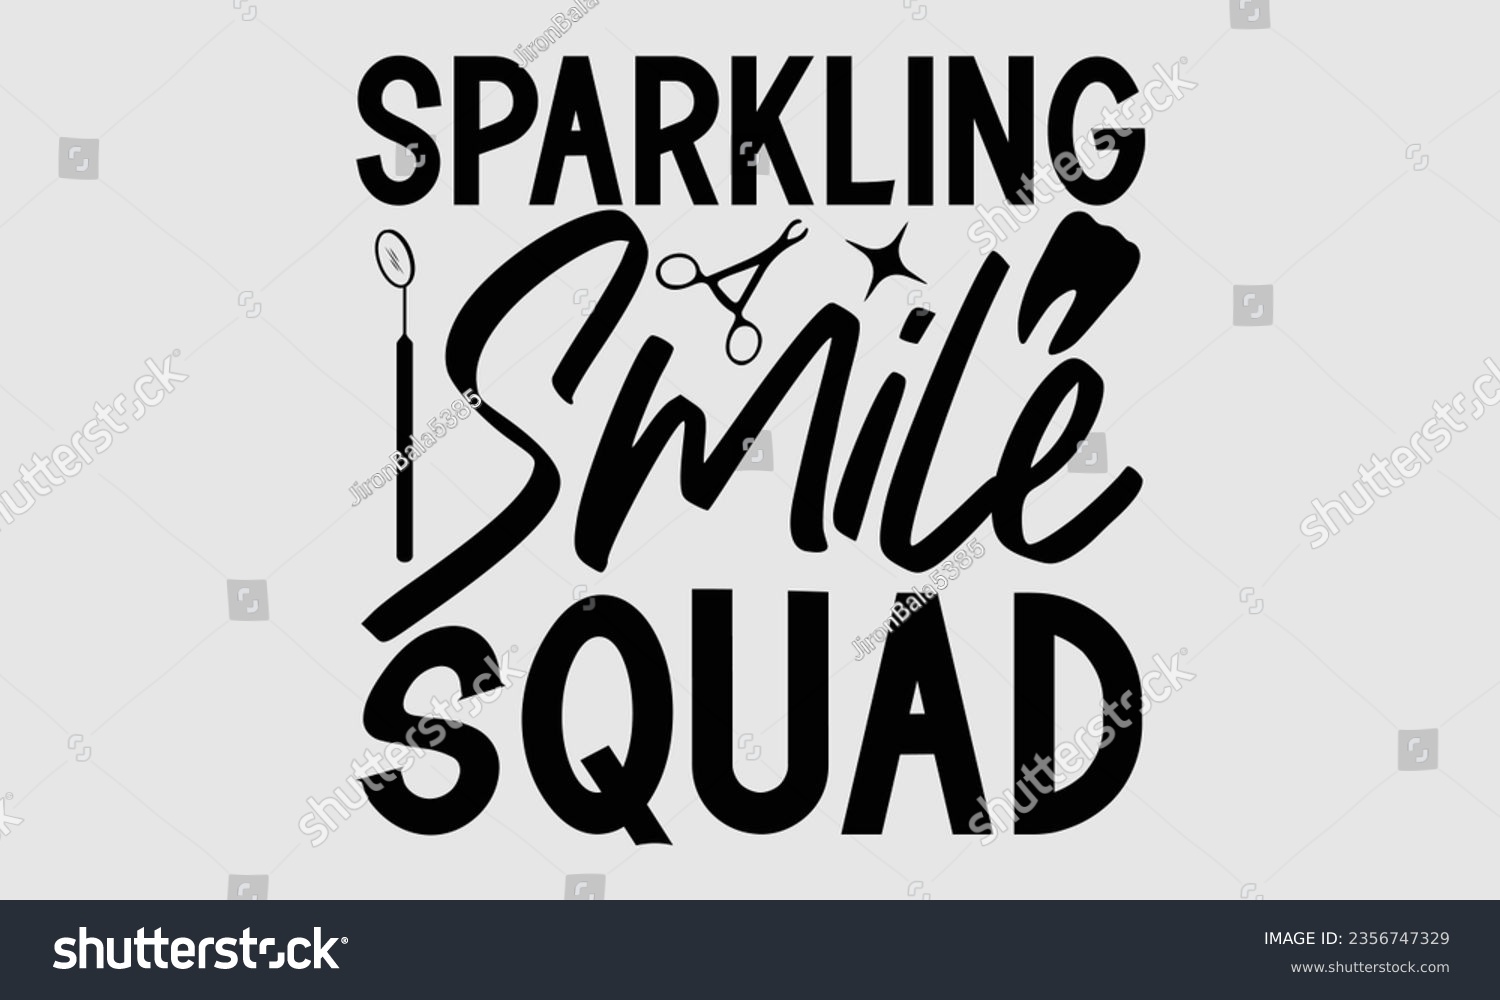 SVG of Sparkling Smile Squad - Dentist t-shirt design, typography t-shirt design, Hand drawn vintage illustration with hand-lettering and decoration elements. svg